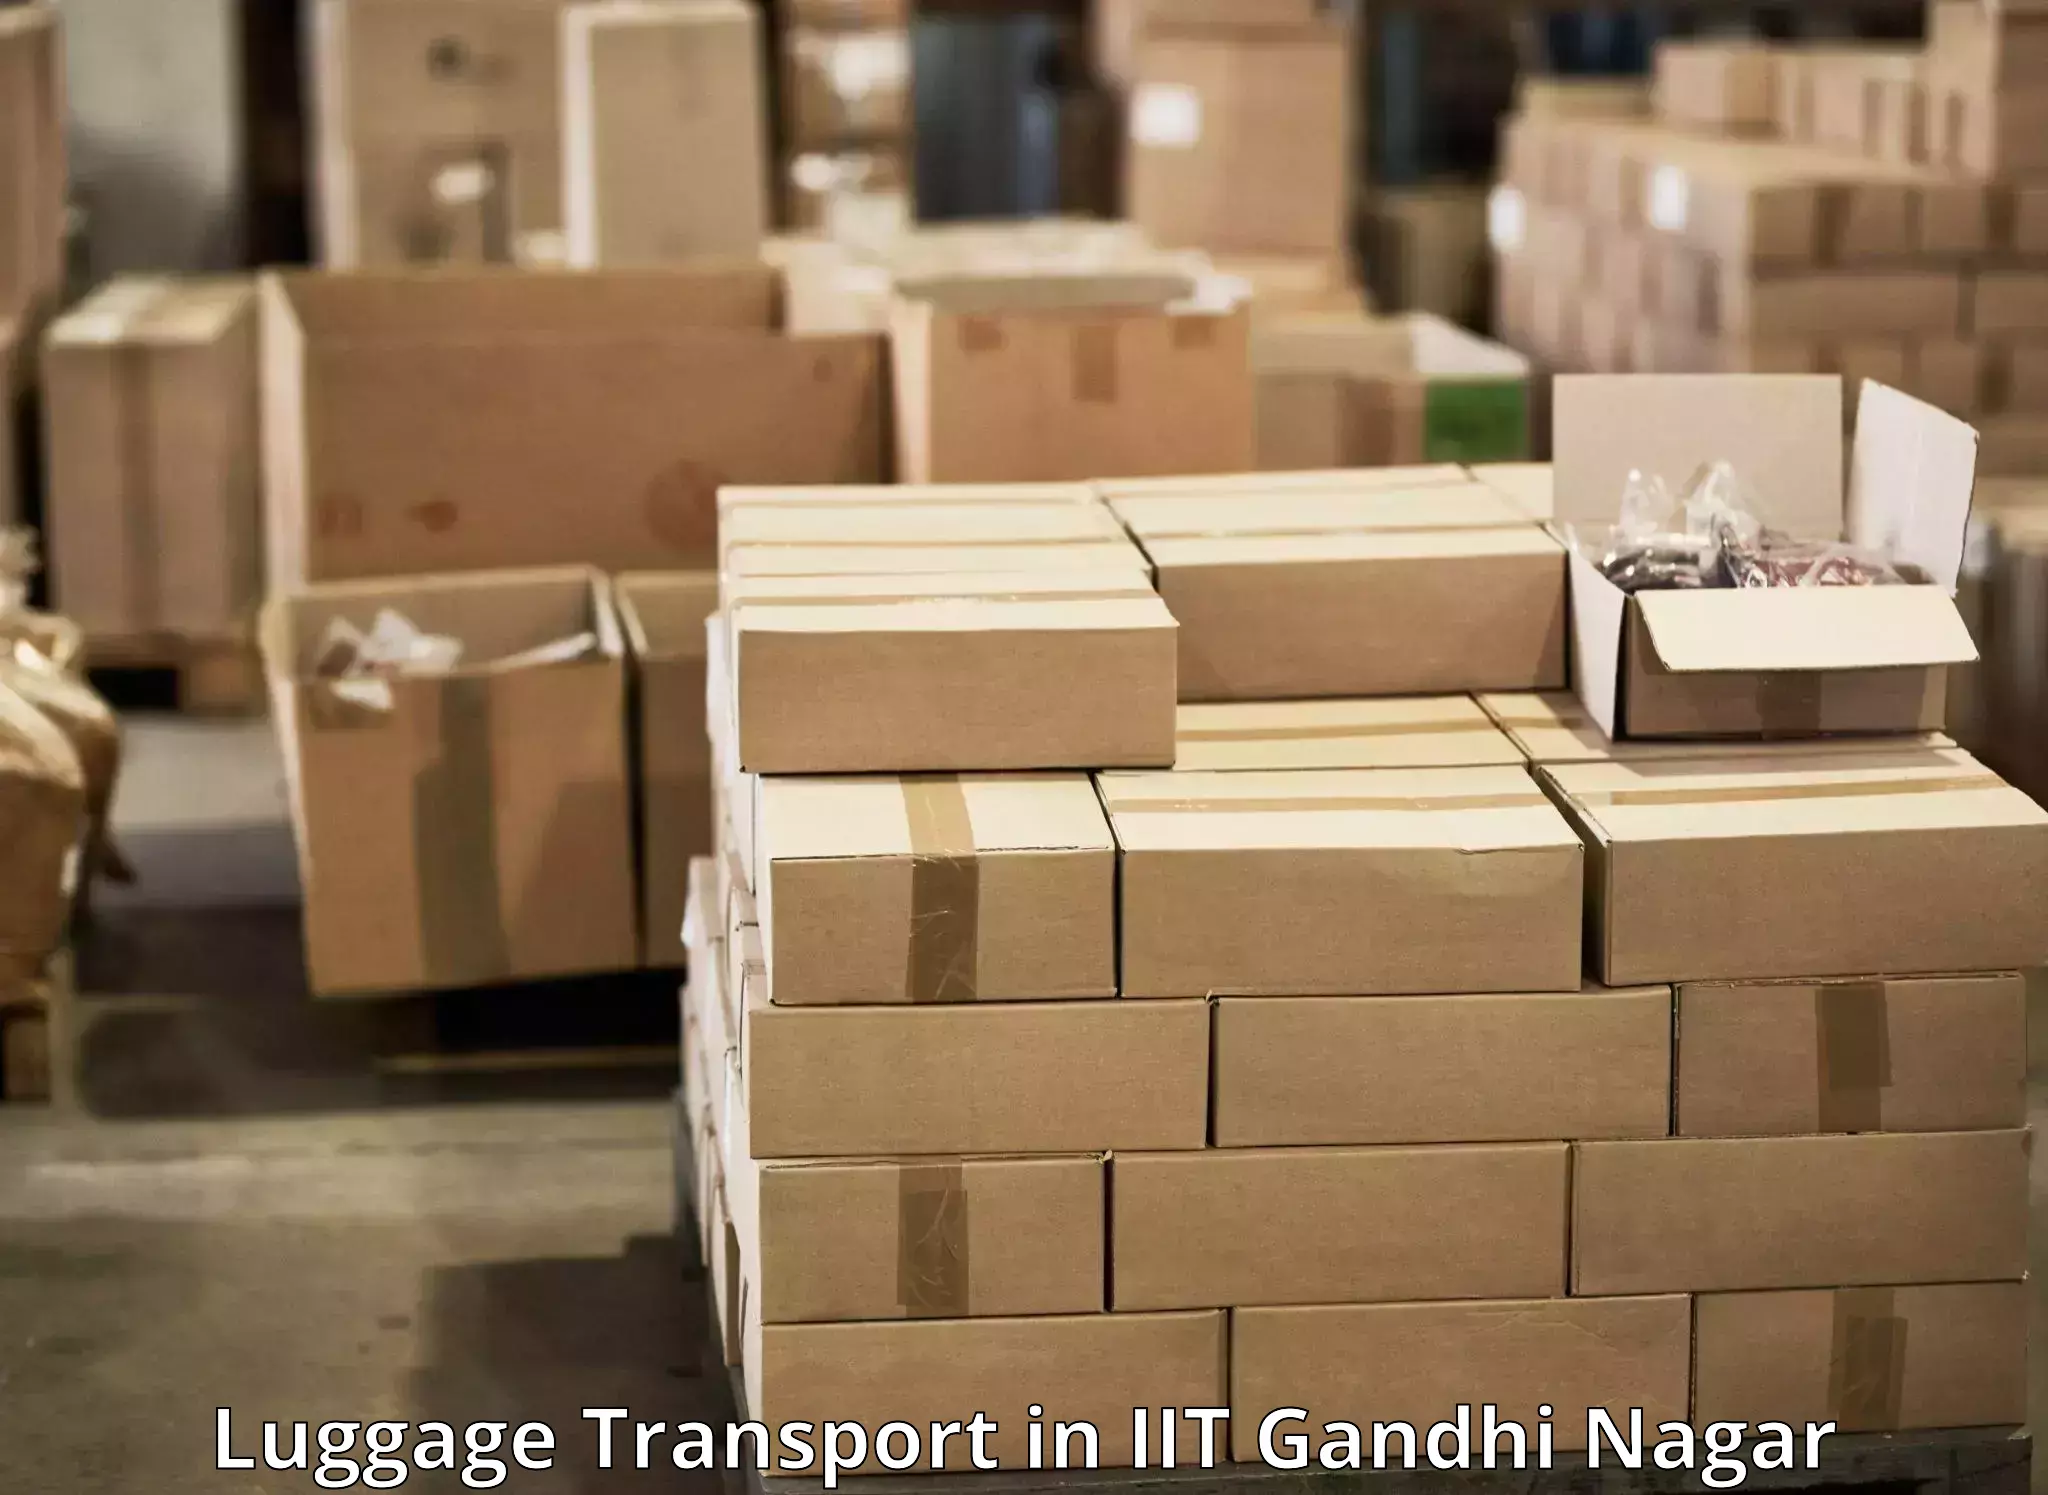 Personal luggage delivery in IIT Gandhi Nagar